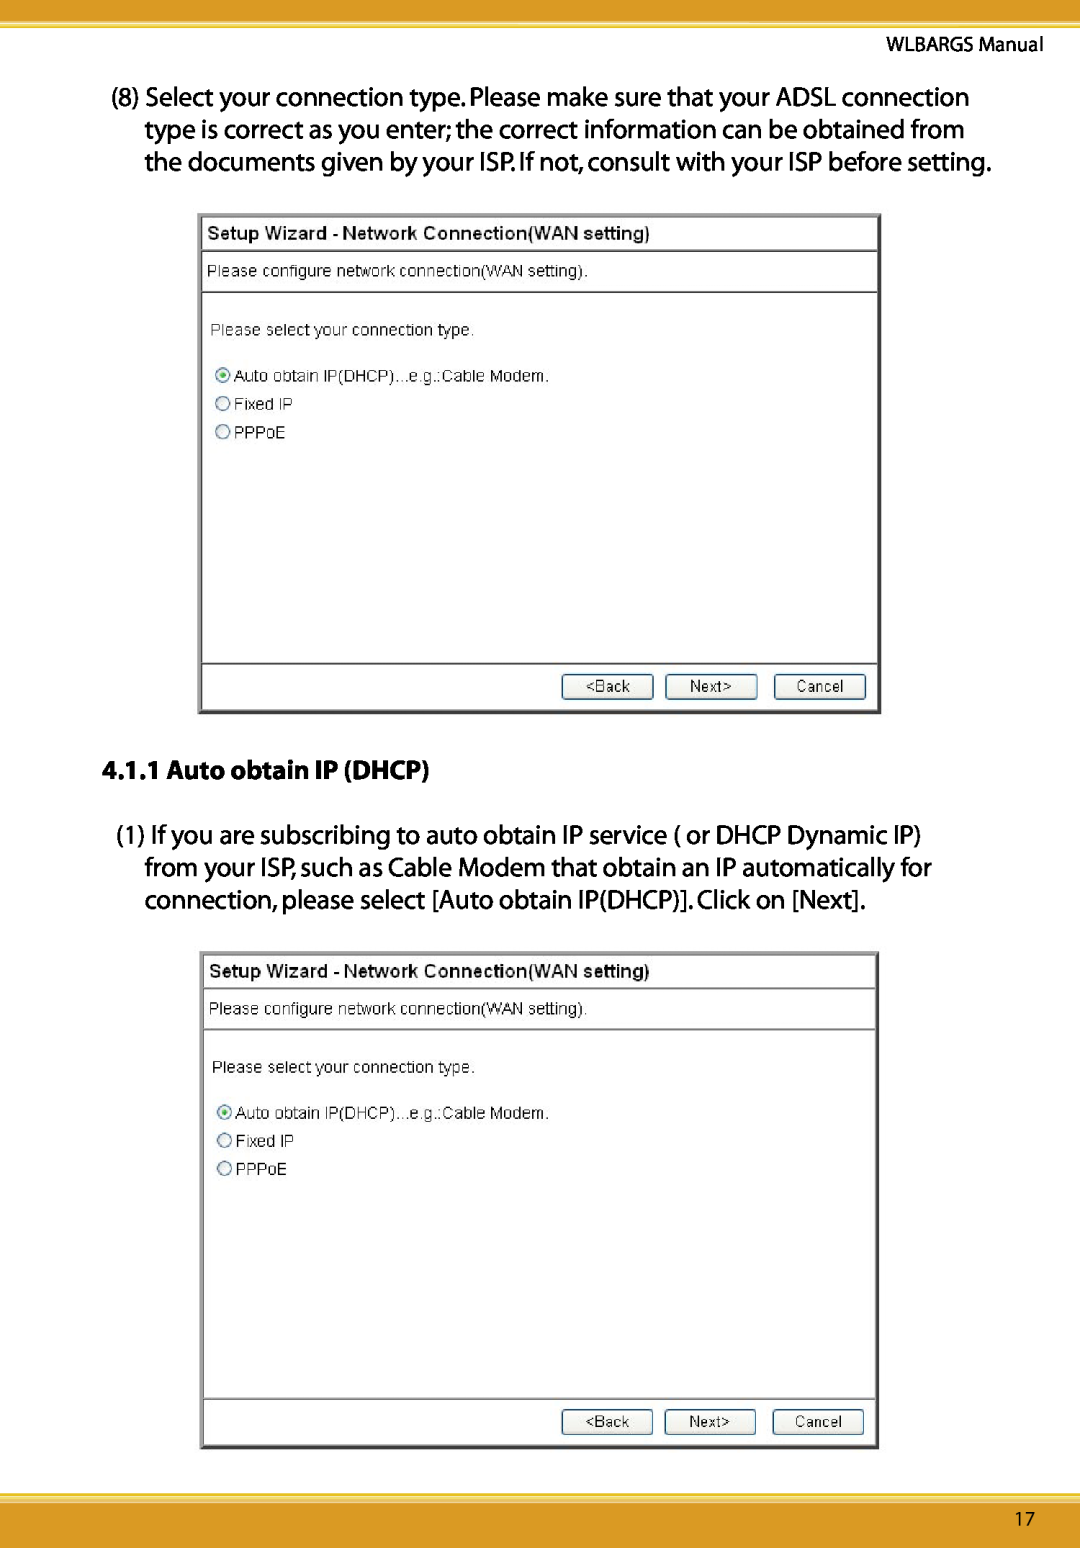 Allied Telesis CG-WLBARGS manual Auto obtain IP DHCP 